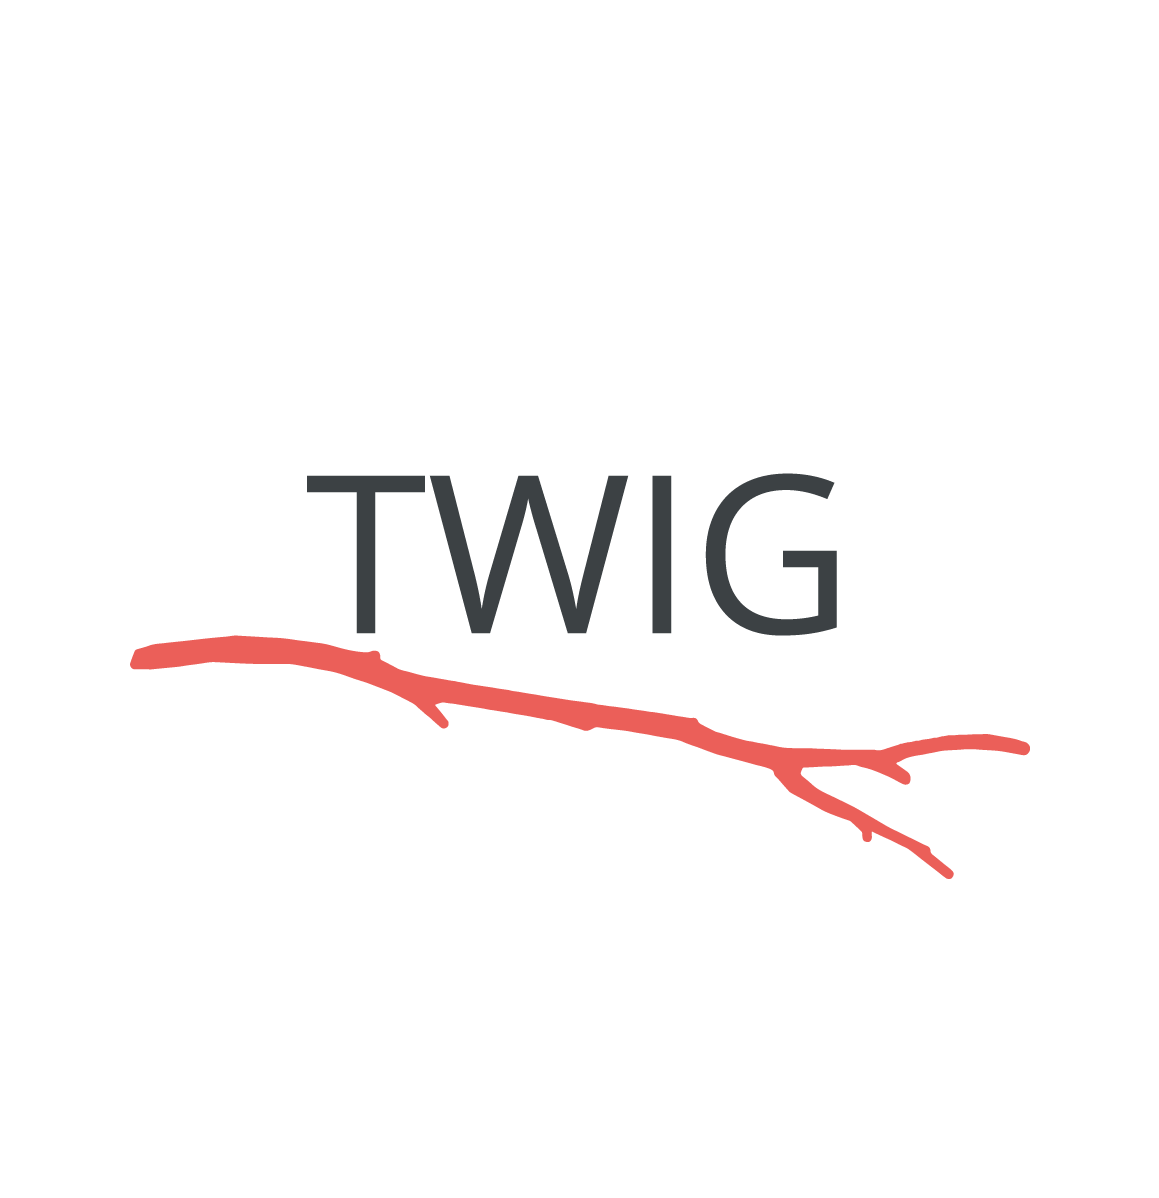 Twig Creative Design